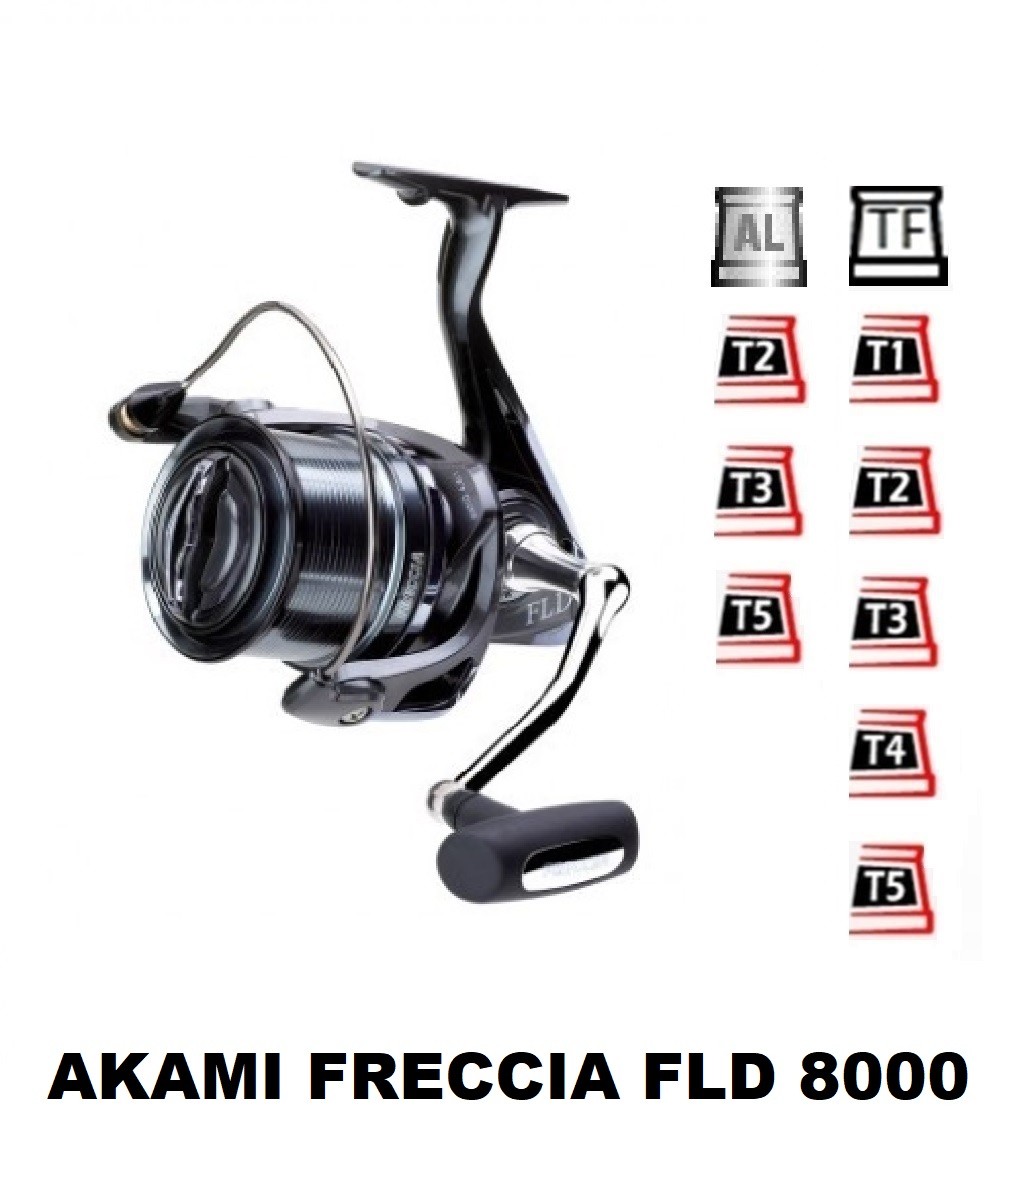 Bobine Akami Freccia FLD 8000